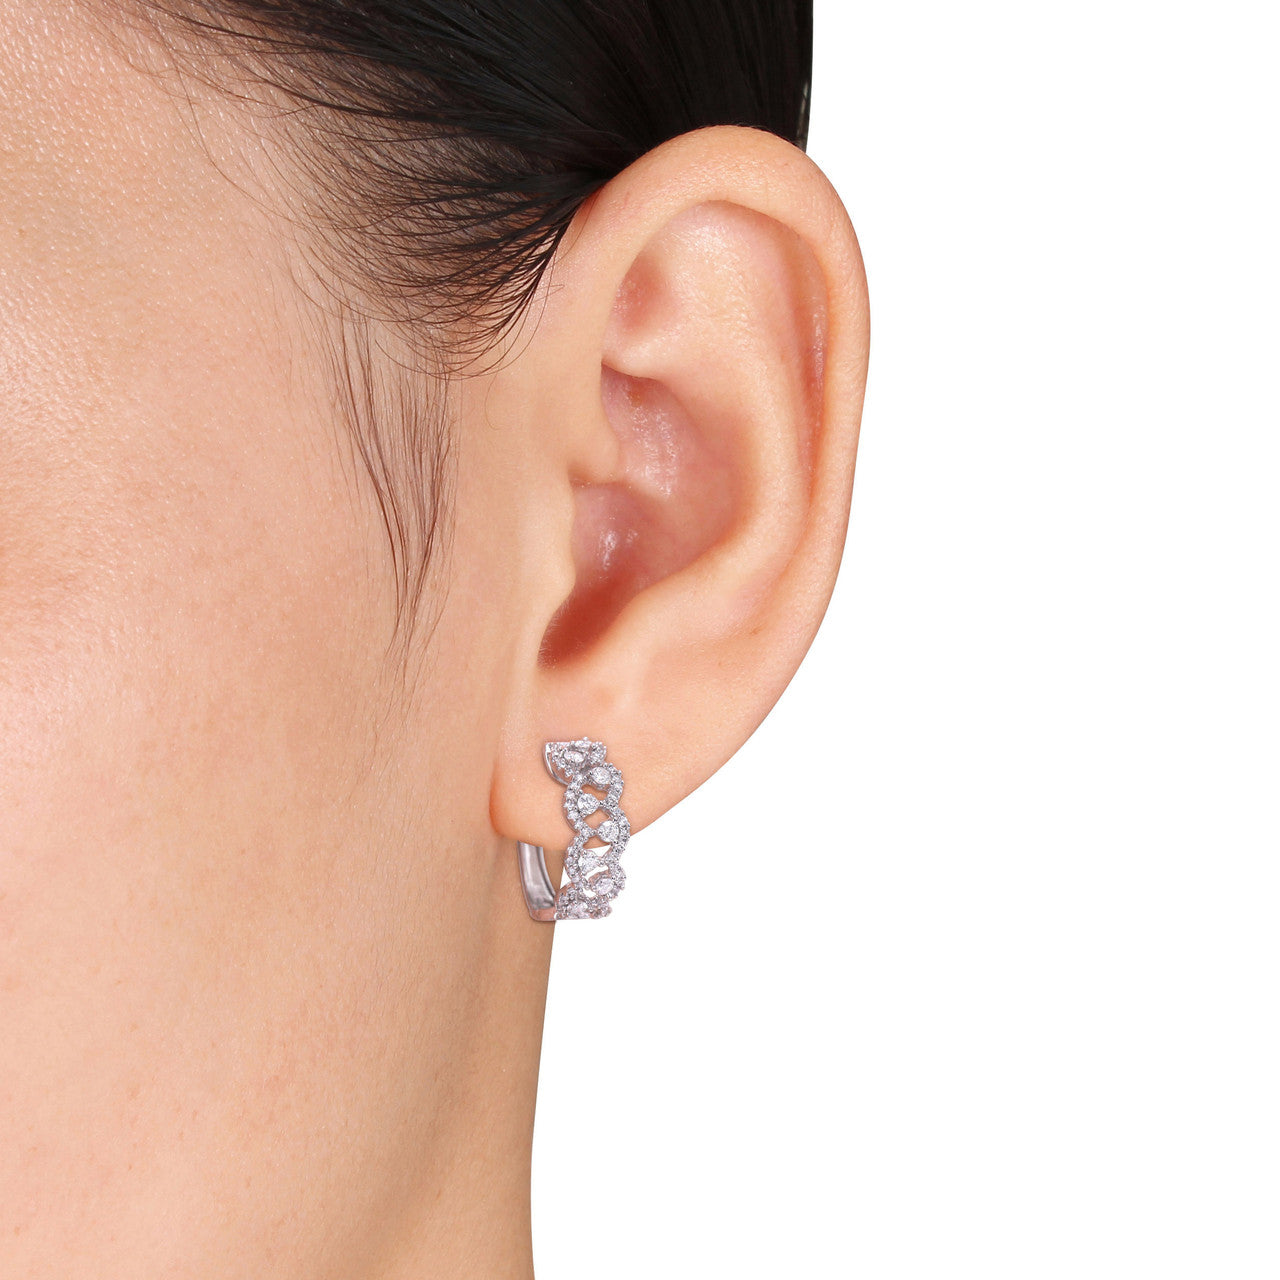 Ice Jewellery 1 CT Diamond Hoop Earrings in 14k White Gold - 75000005740 | Ice Jewellery Australia